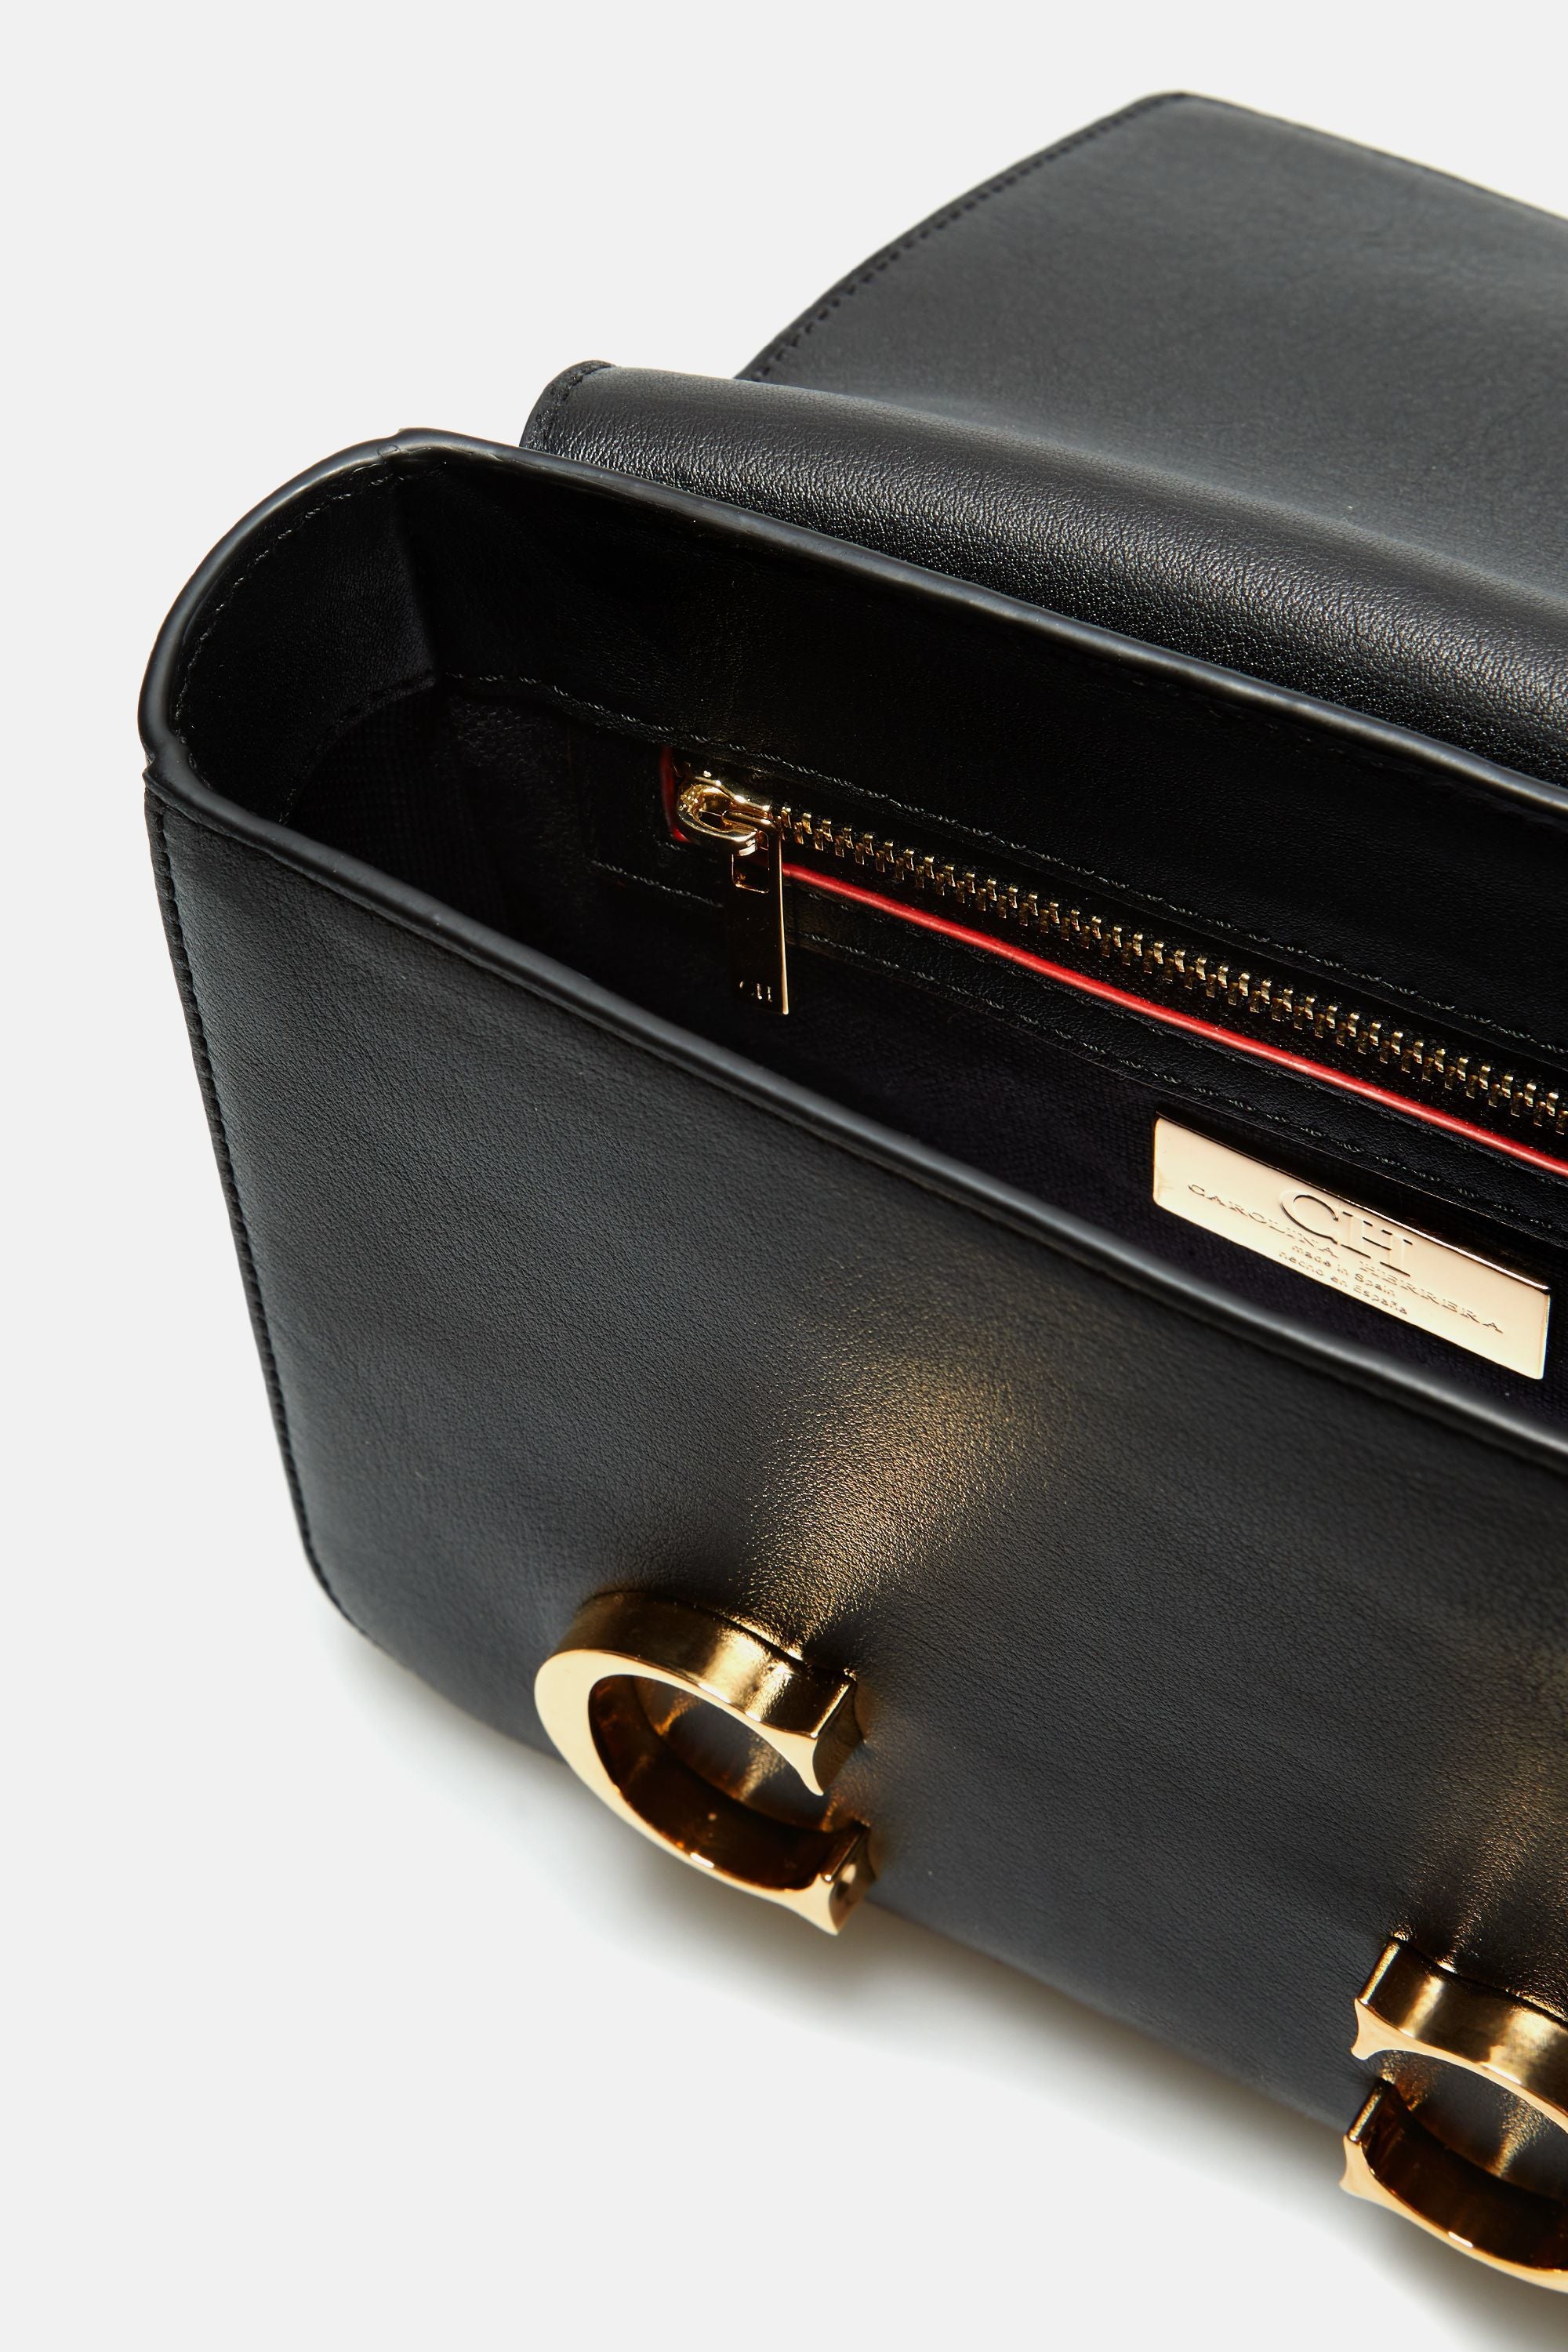 CH Carolina Herrera Black Leather Medium Initials Insignia Shoulder Bag